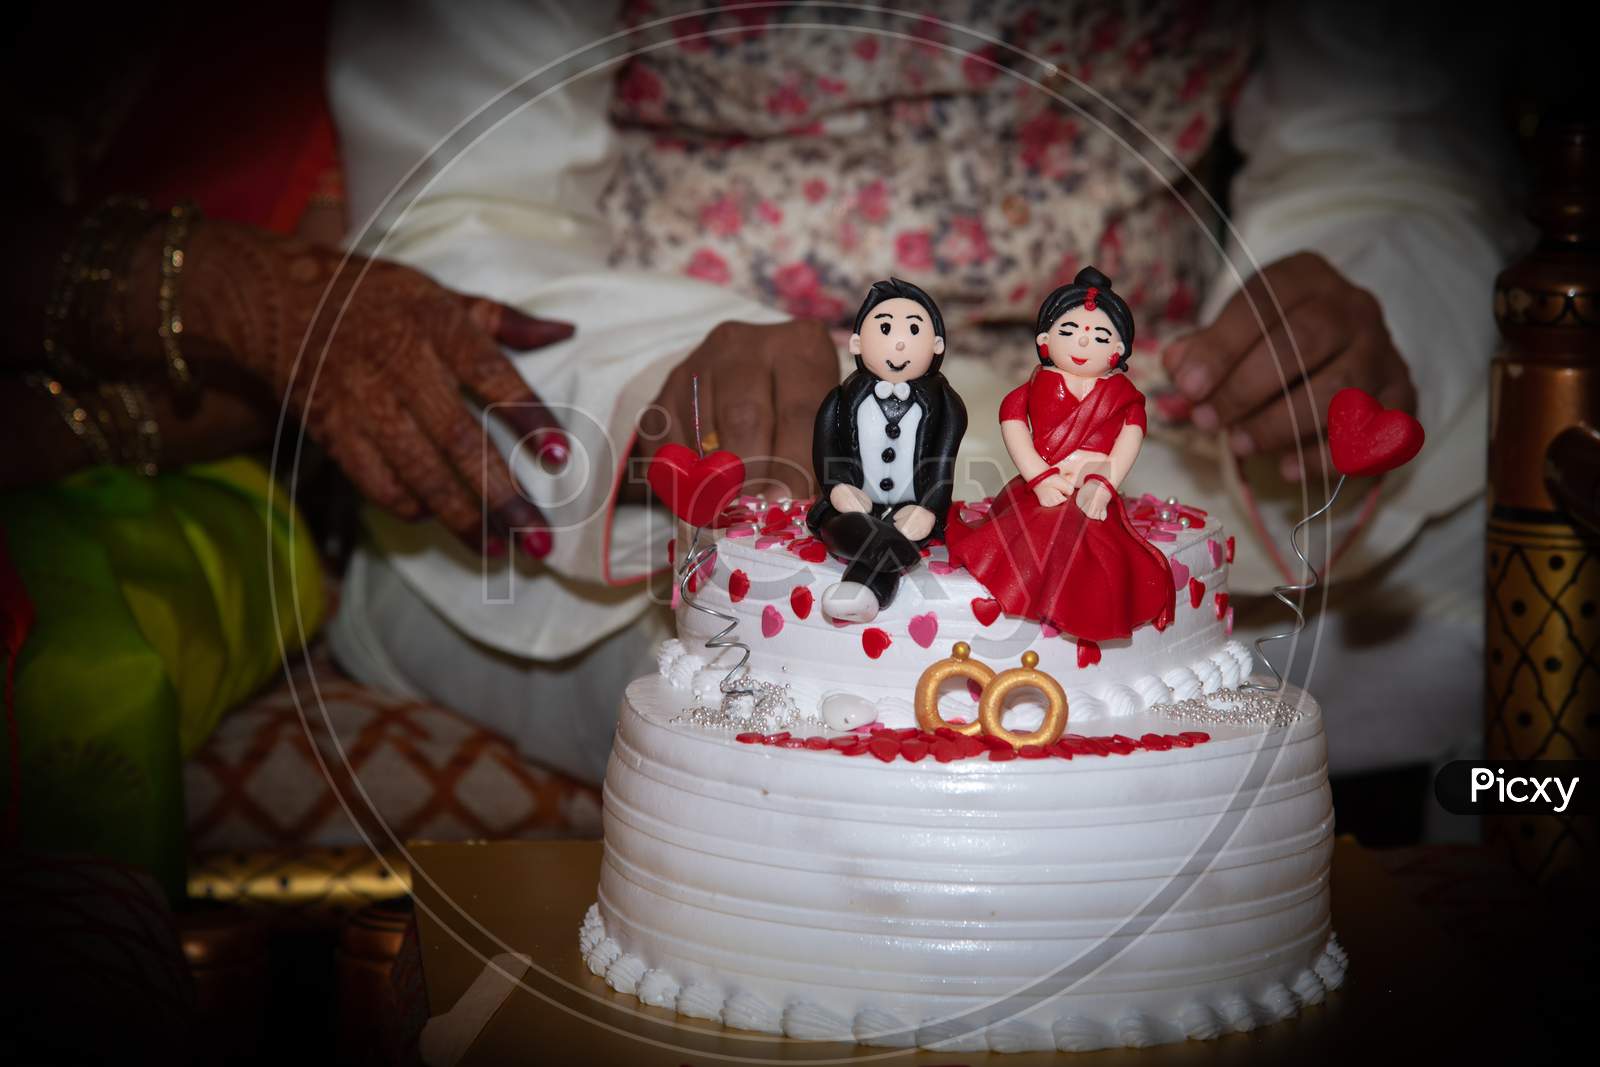 Ring ceremony cake design #ringceremony #engagement #cake #cakedesign #cakes  #cakeart #cakedesign #cakelover #cakedesigner #cakes #desi... | Instagram